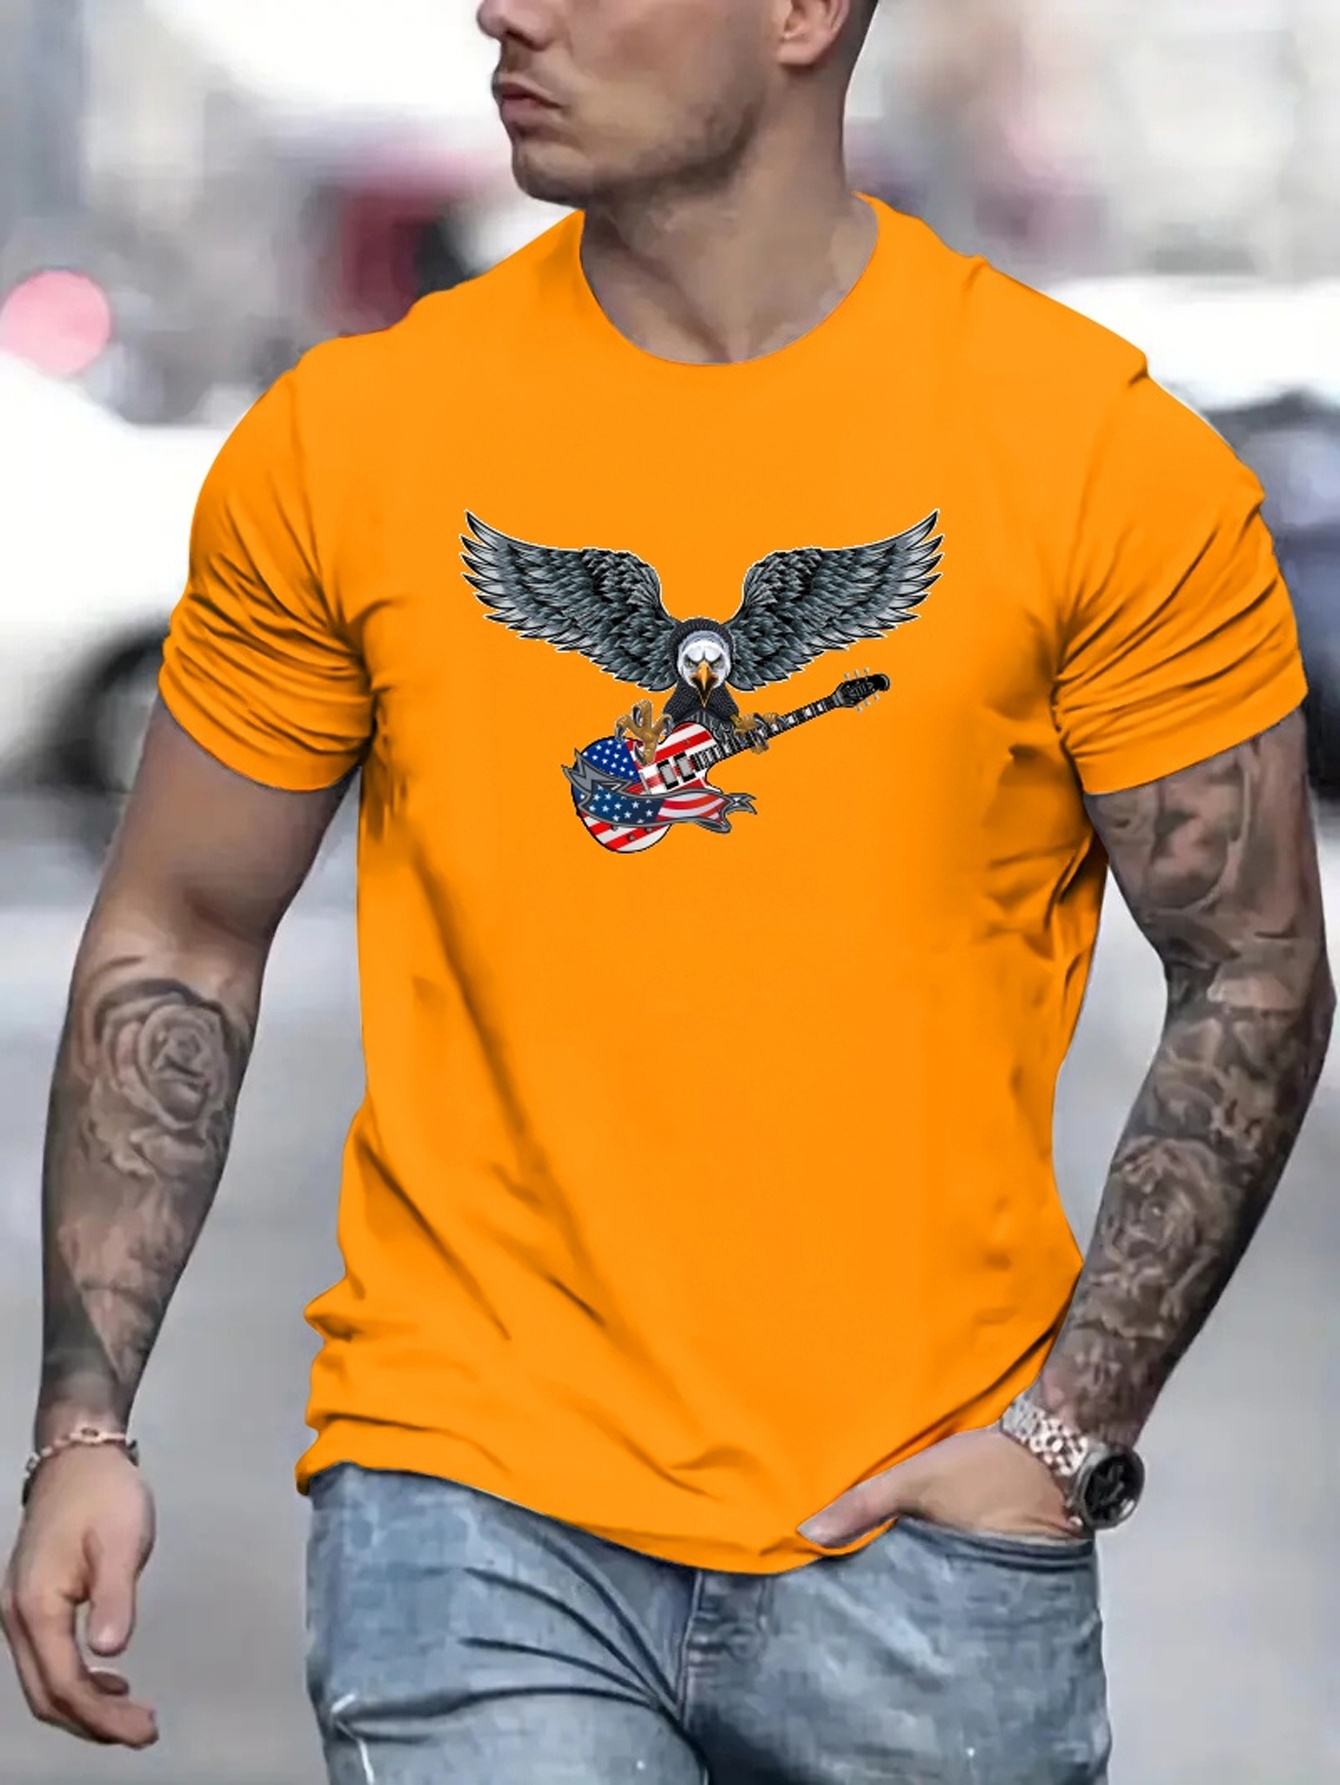 Logo T-Shirt Men's Fender Eagle Crewneck Graphic T Shirt